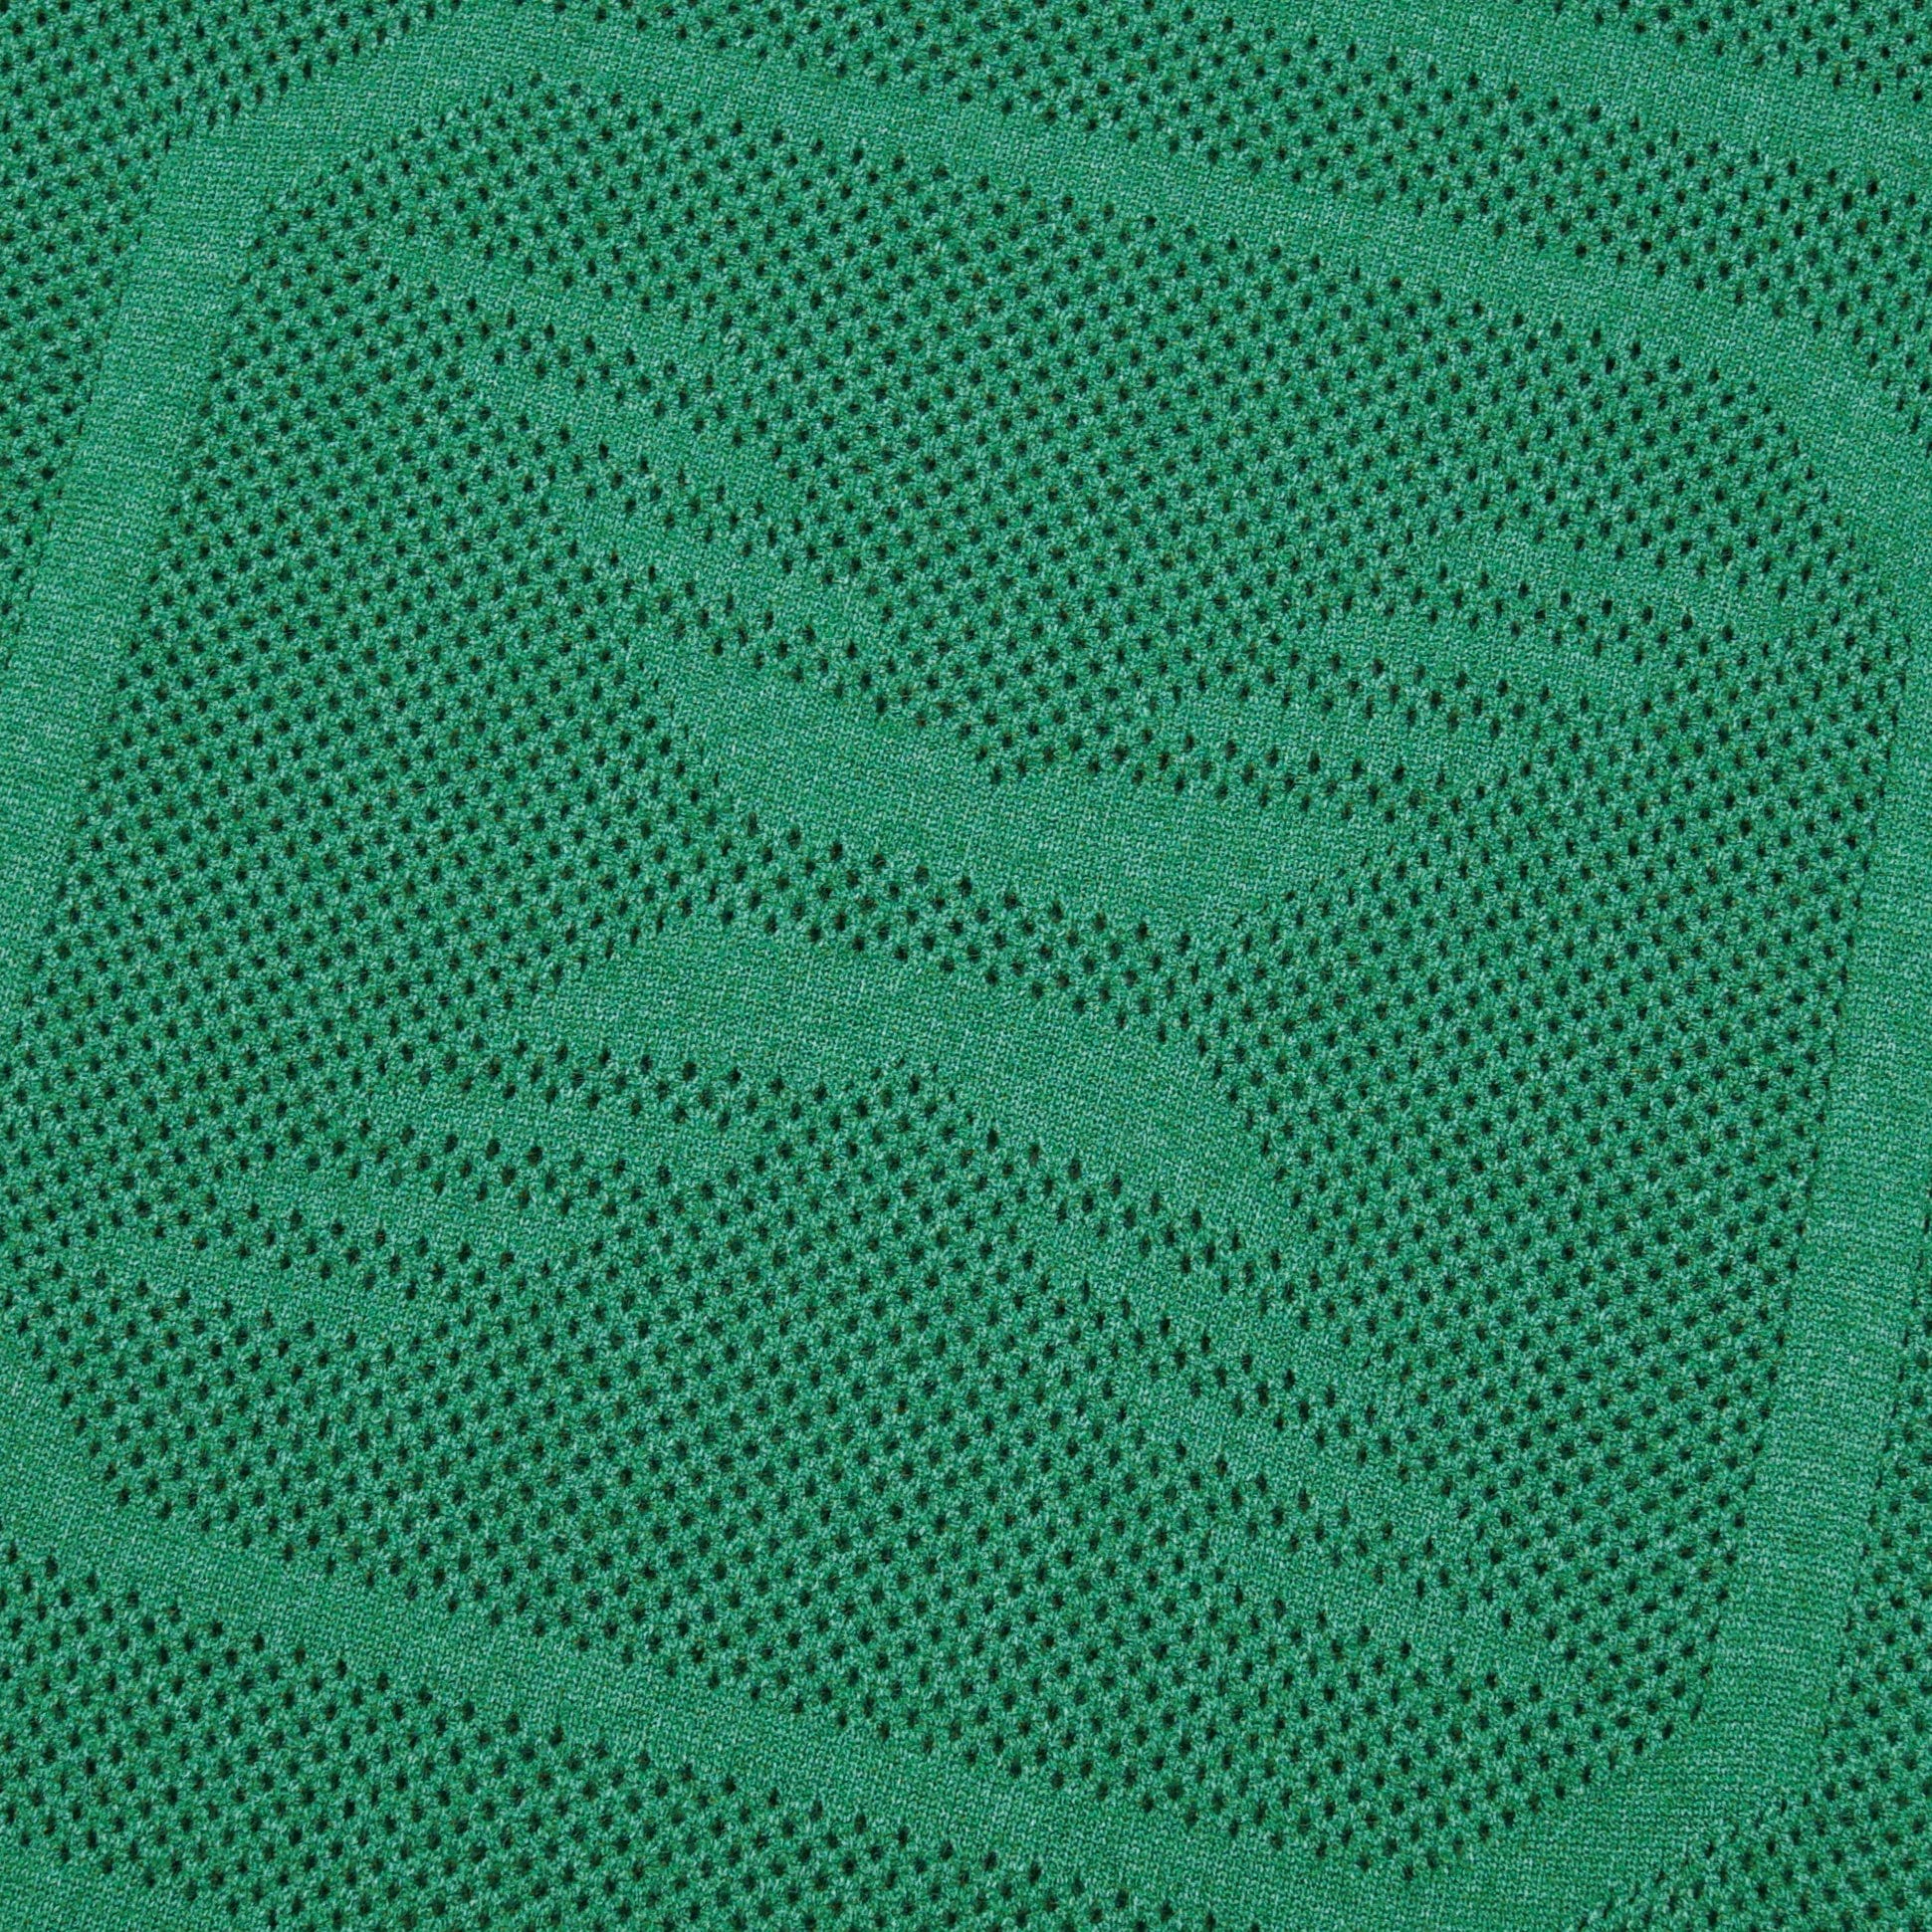 SOF Premium Logo Knit Jersey in green